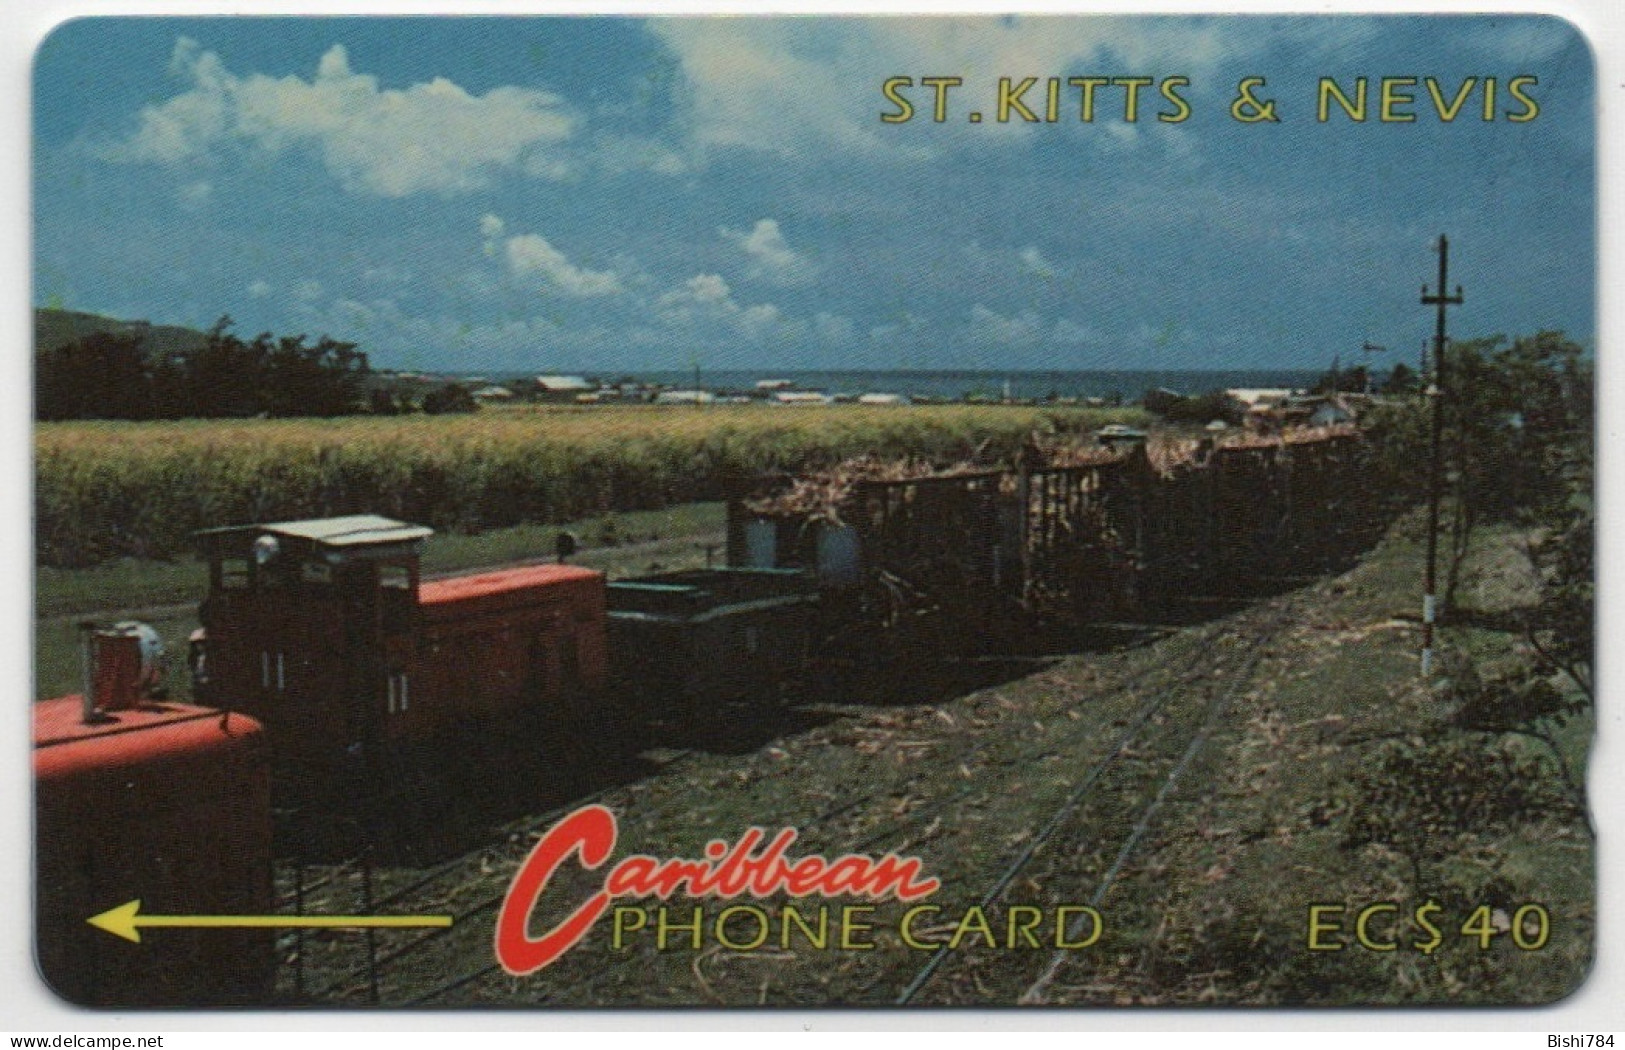 St. Kitts & Nevis - Sugar Cane Train - 5CSKB - St. Kitts & Nevis